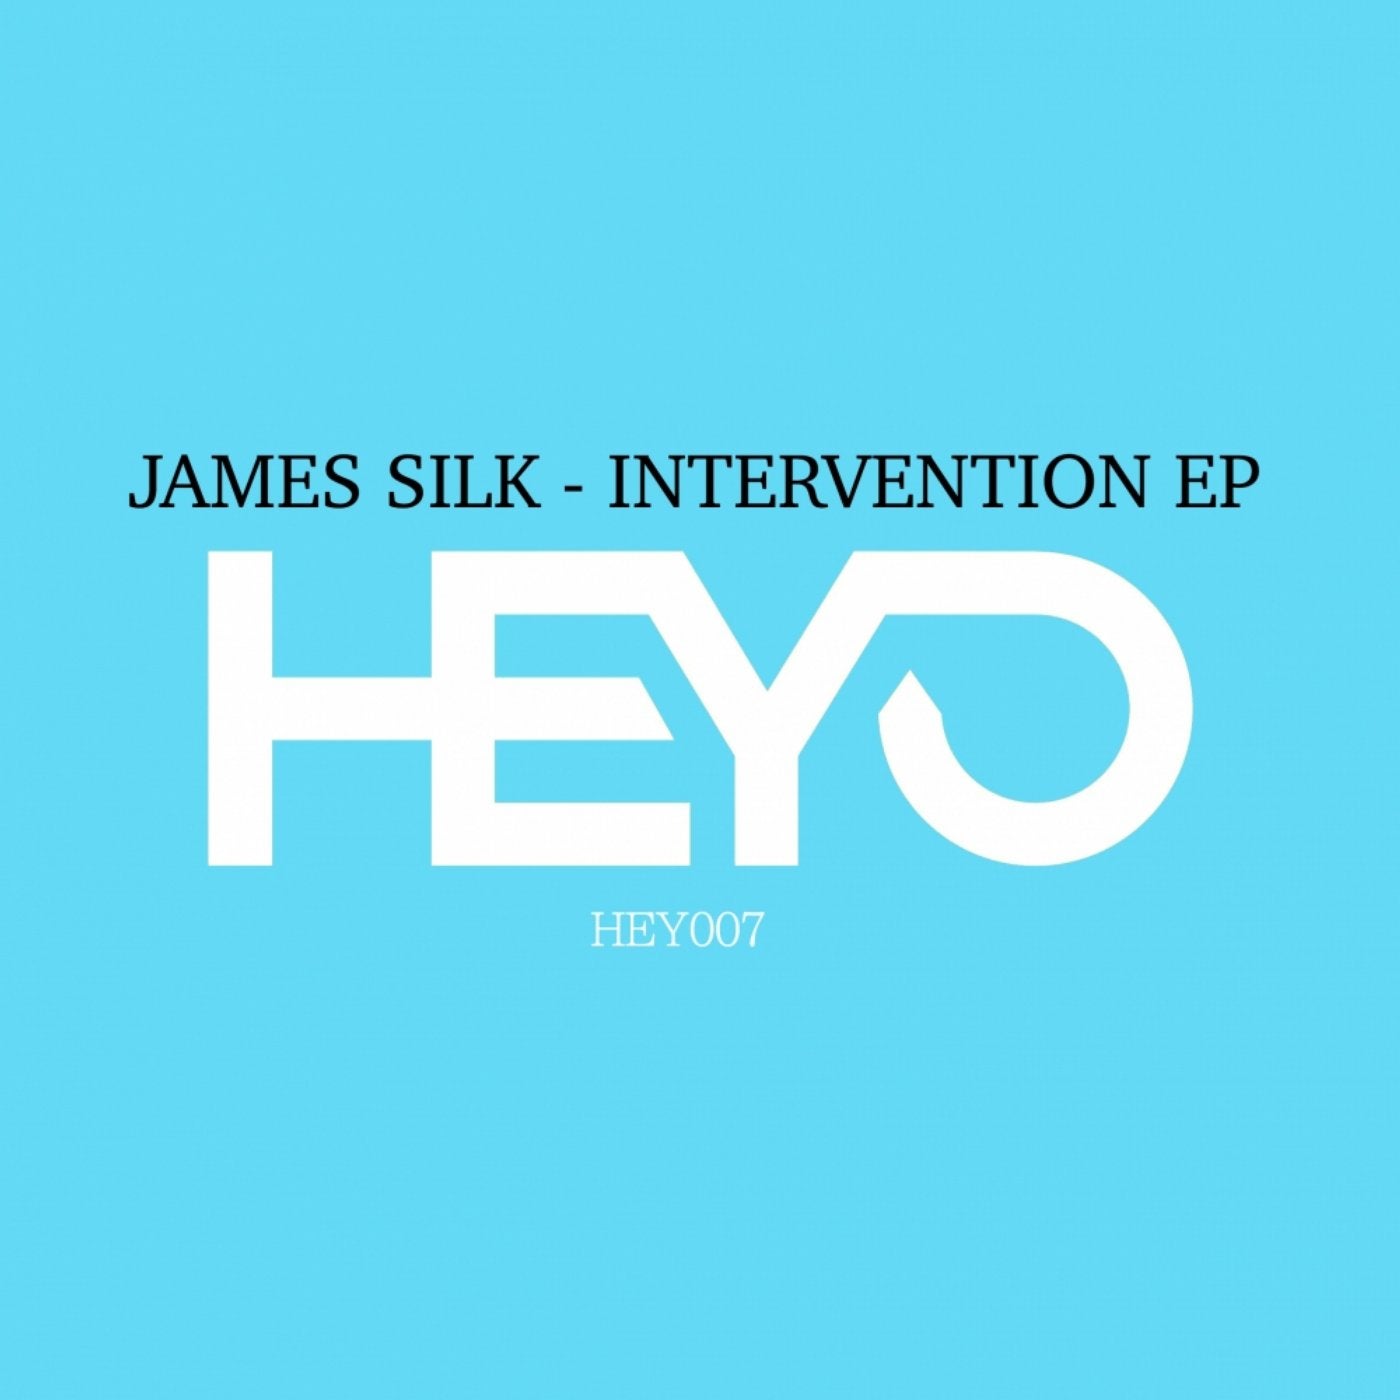 Intervention EP